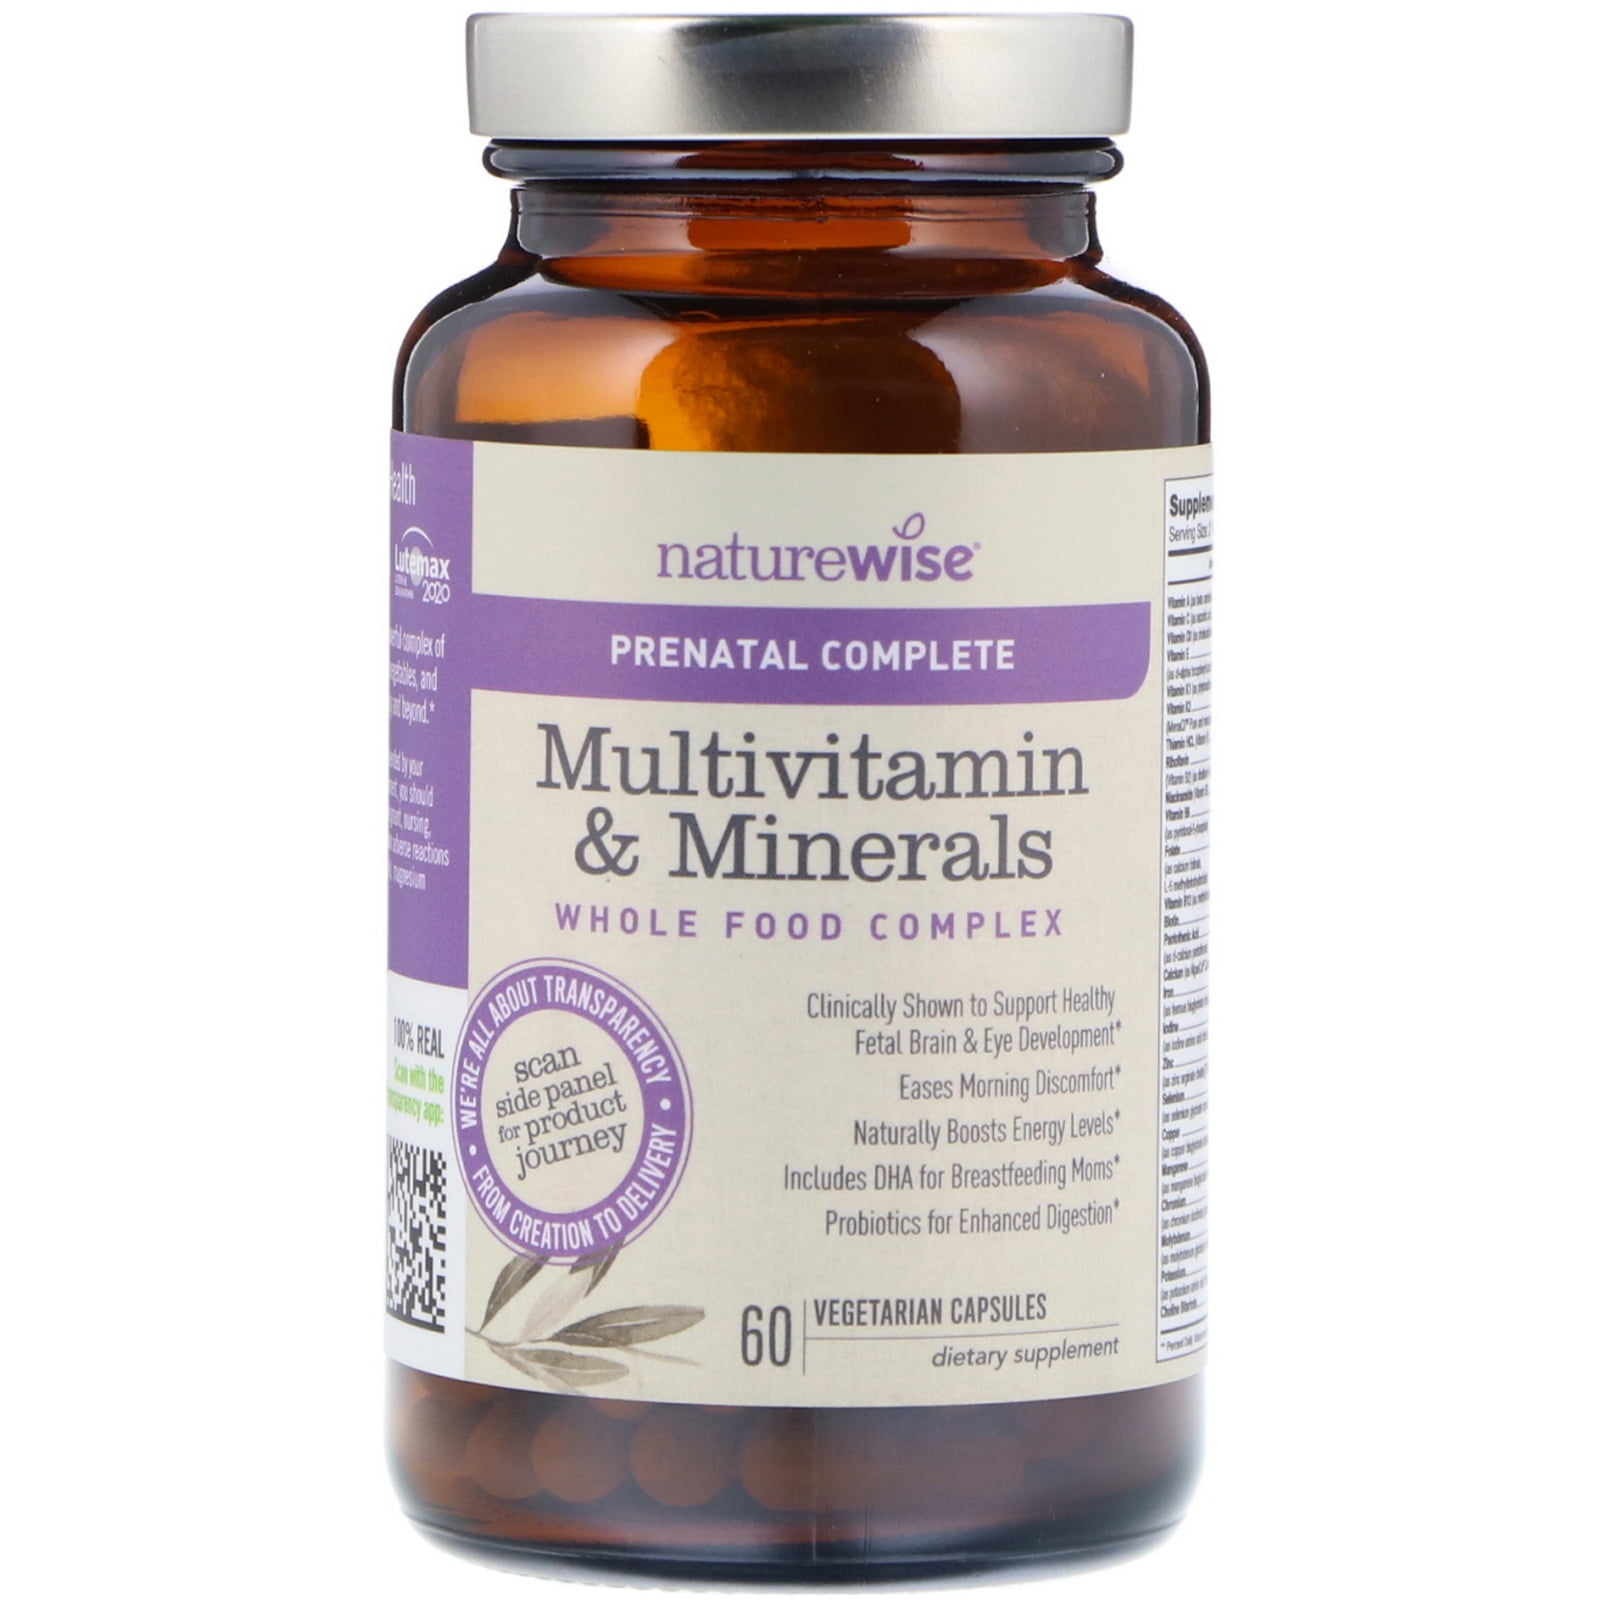 NatureWise Prenatal Complete, Multivitamin & Minerals, Whole Food Complex